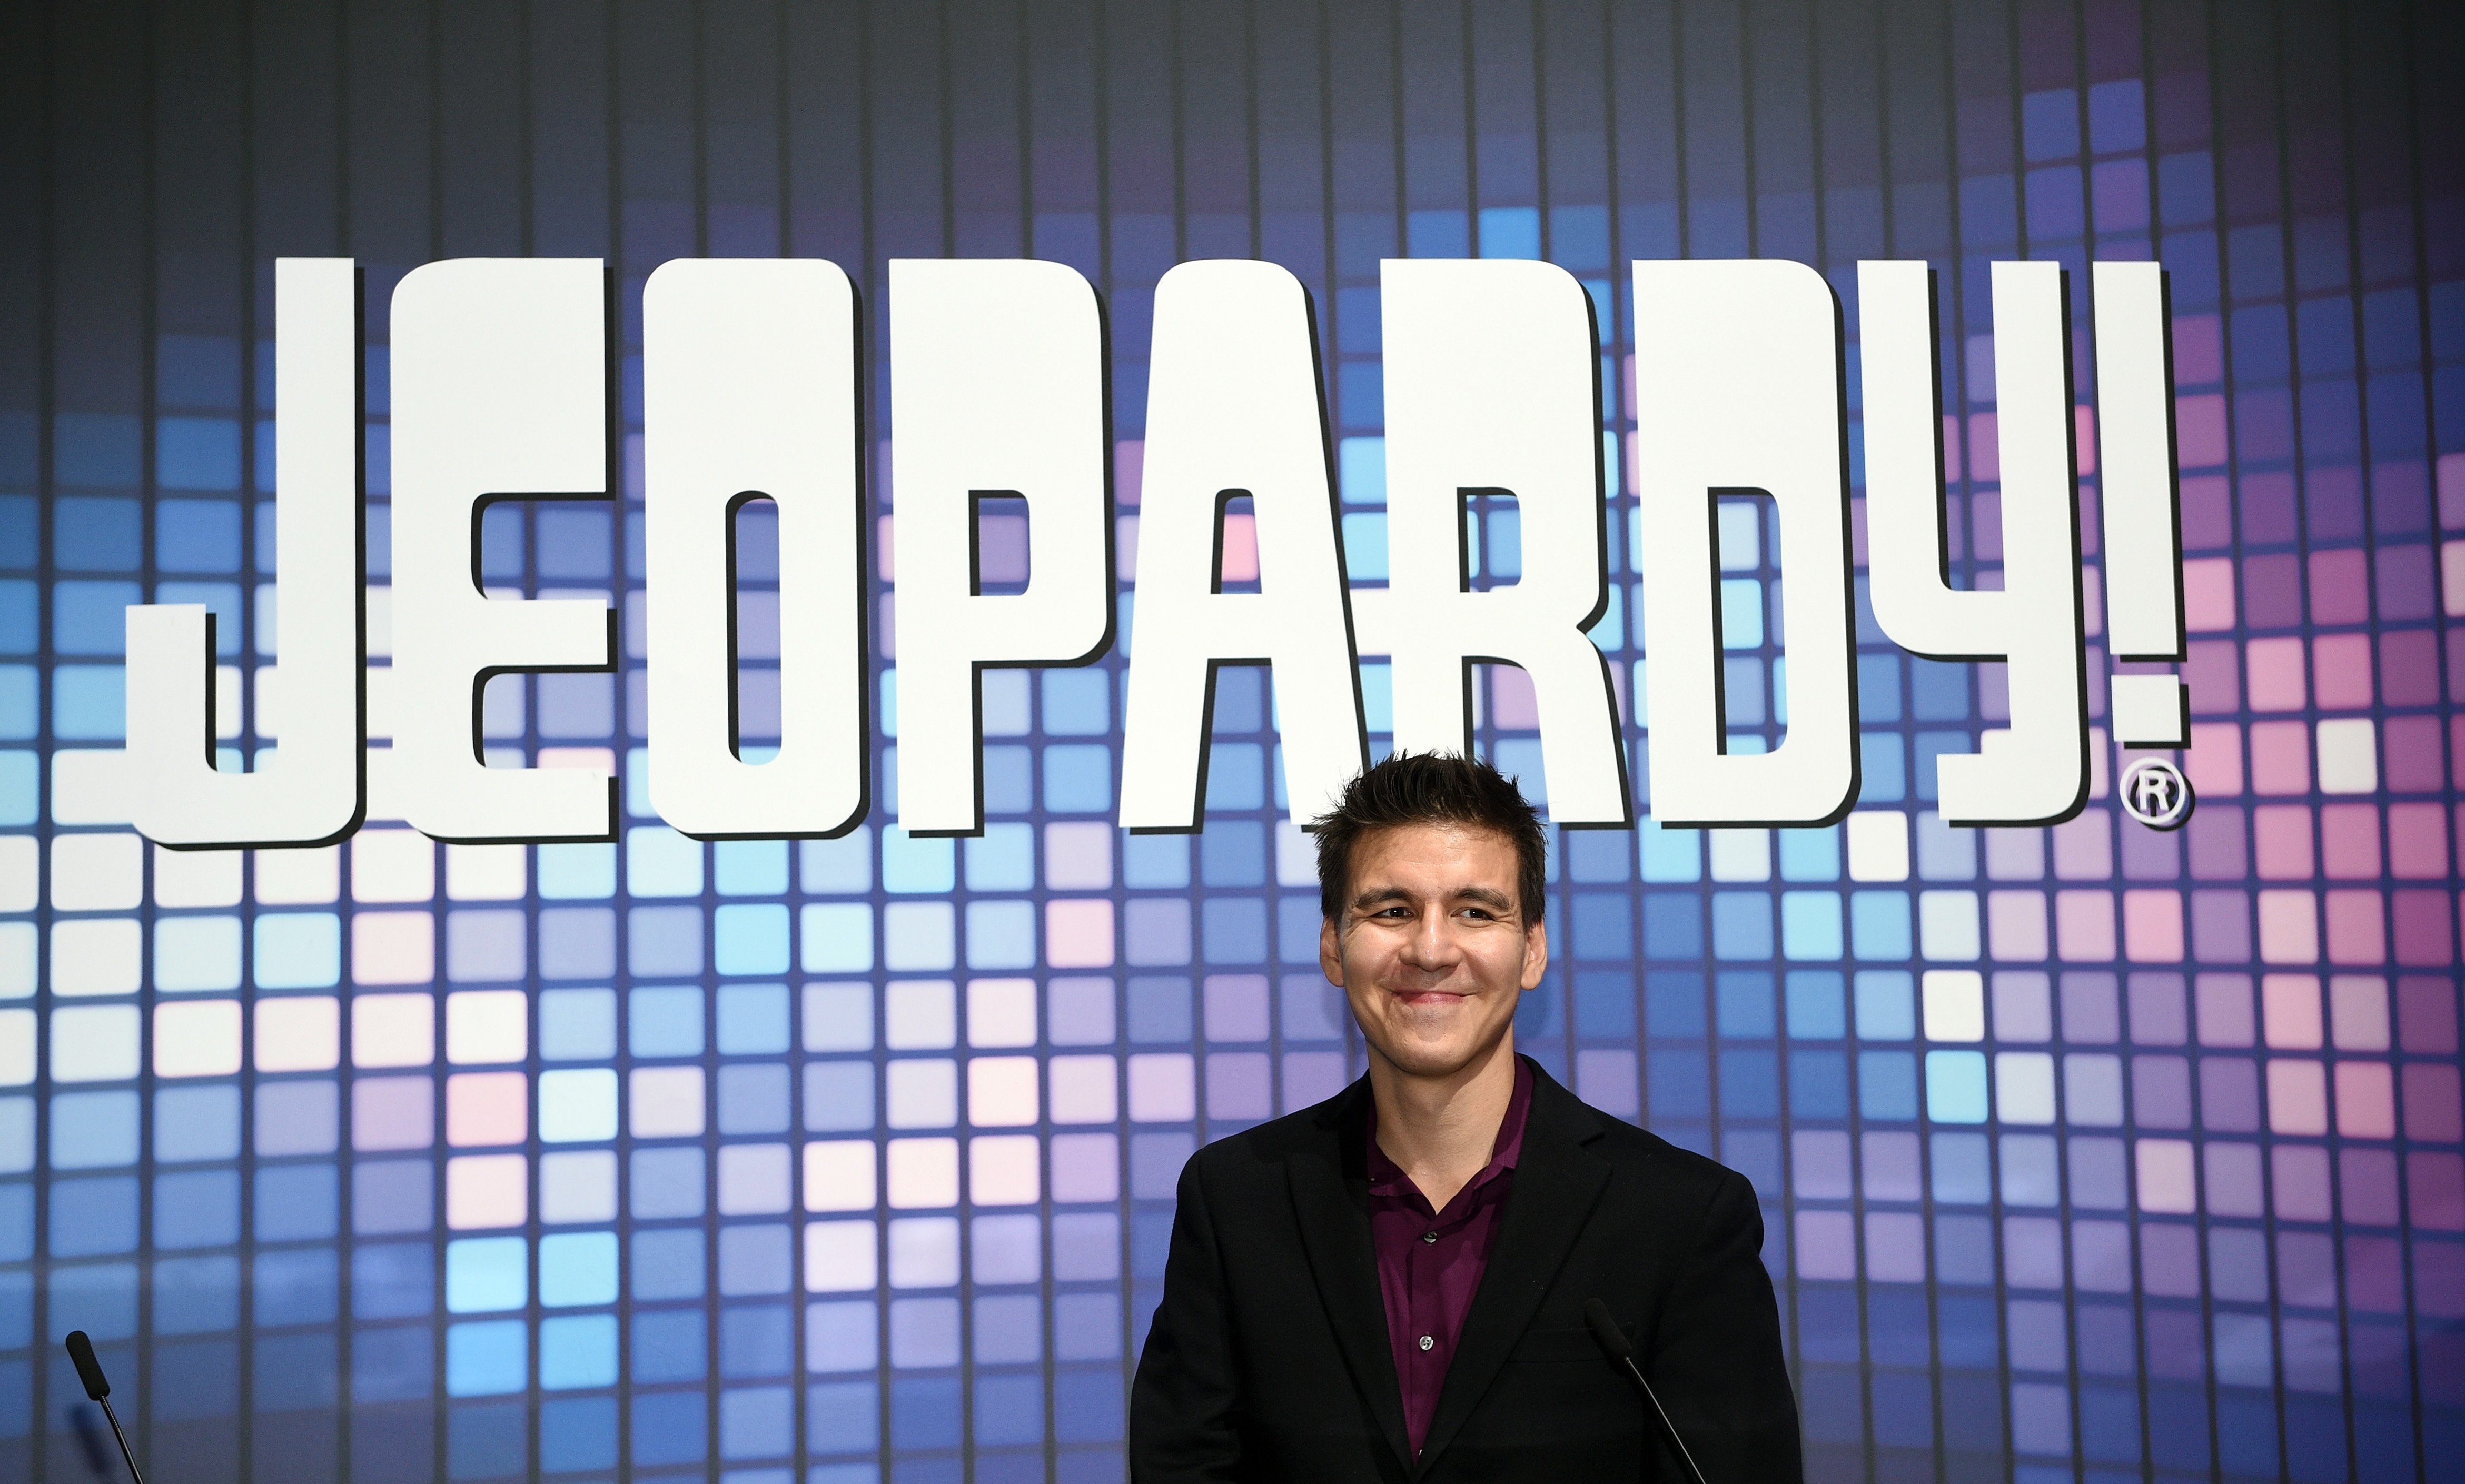 'Jeopardy!' champ James Holzhauer